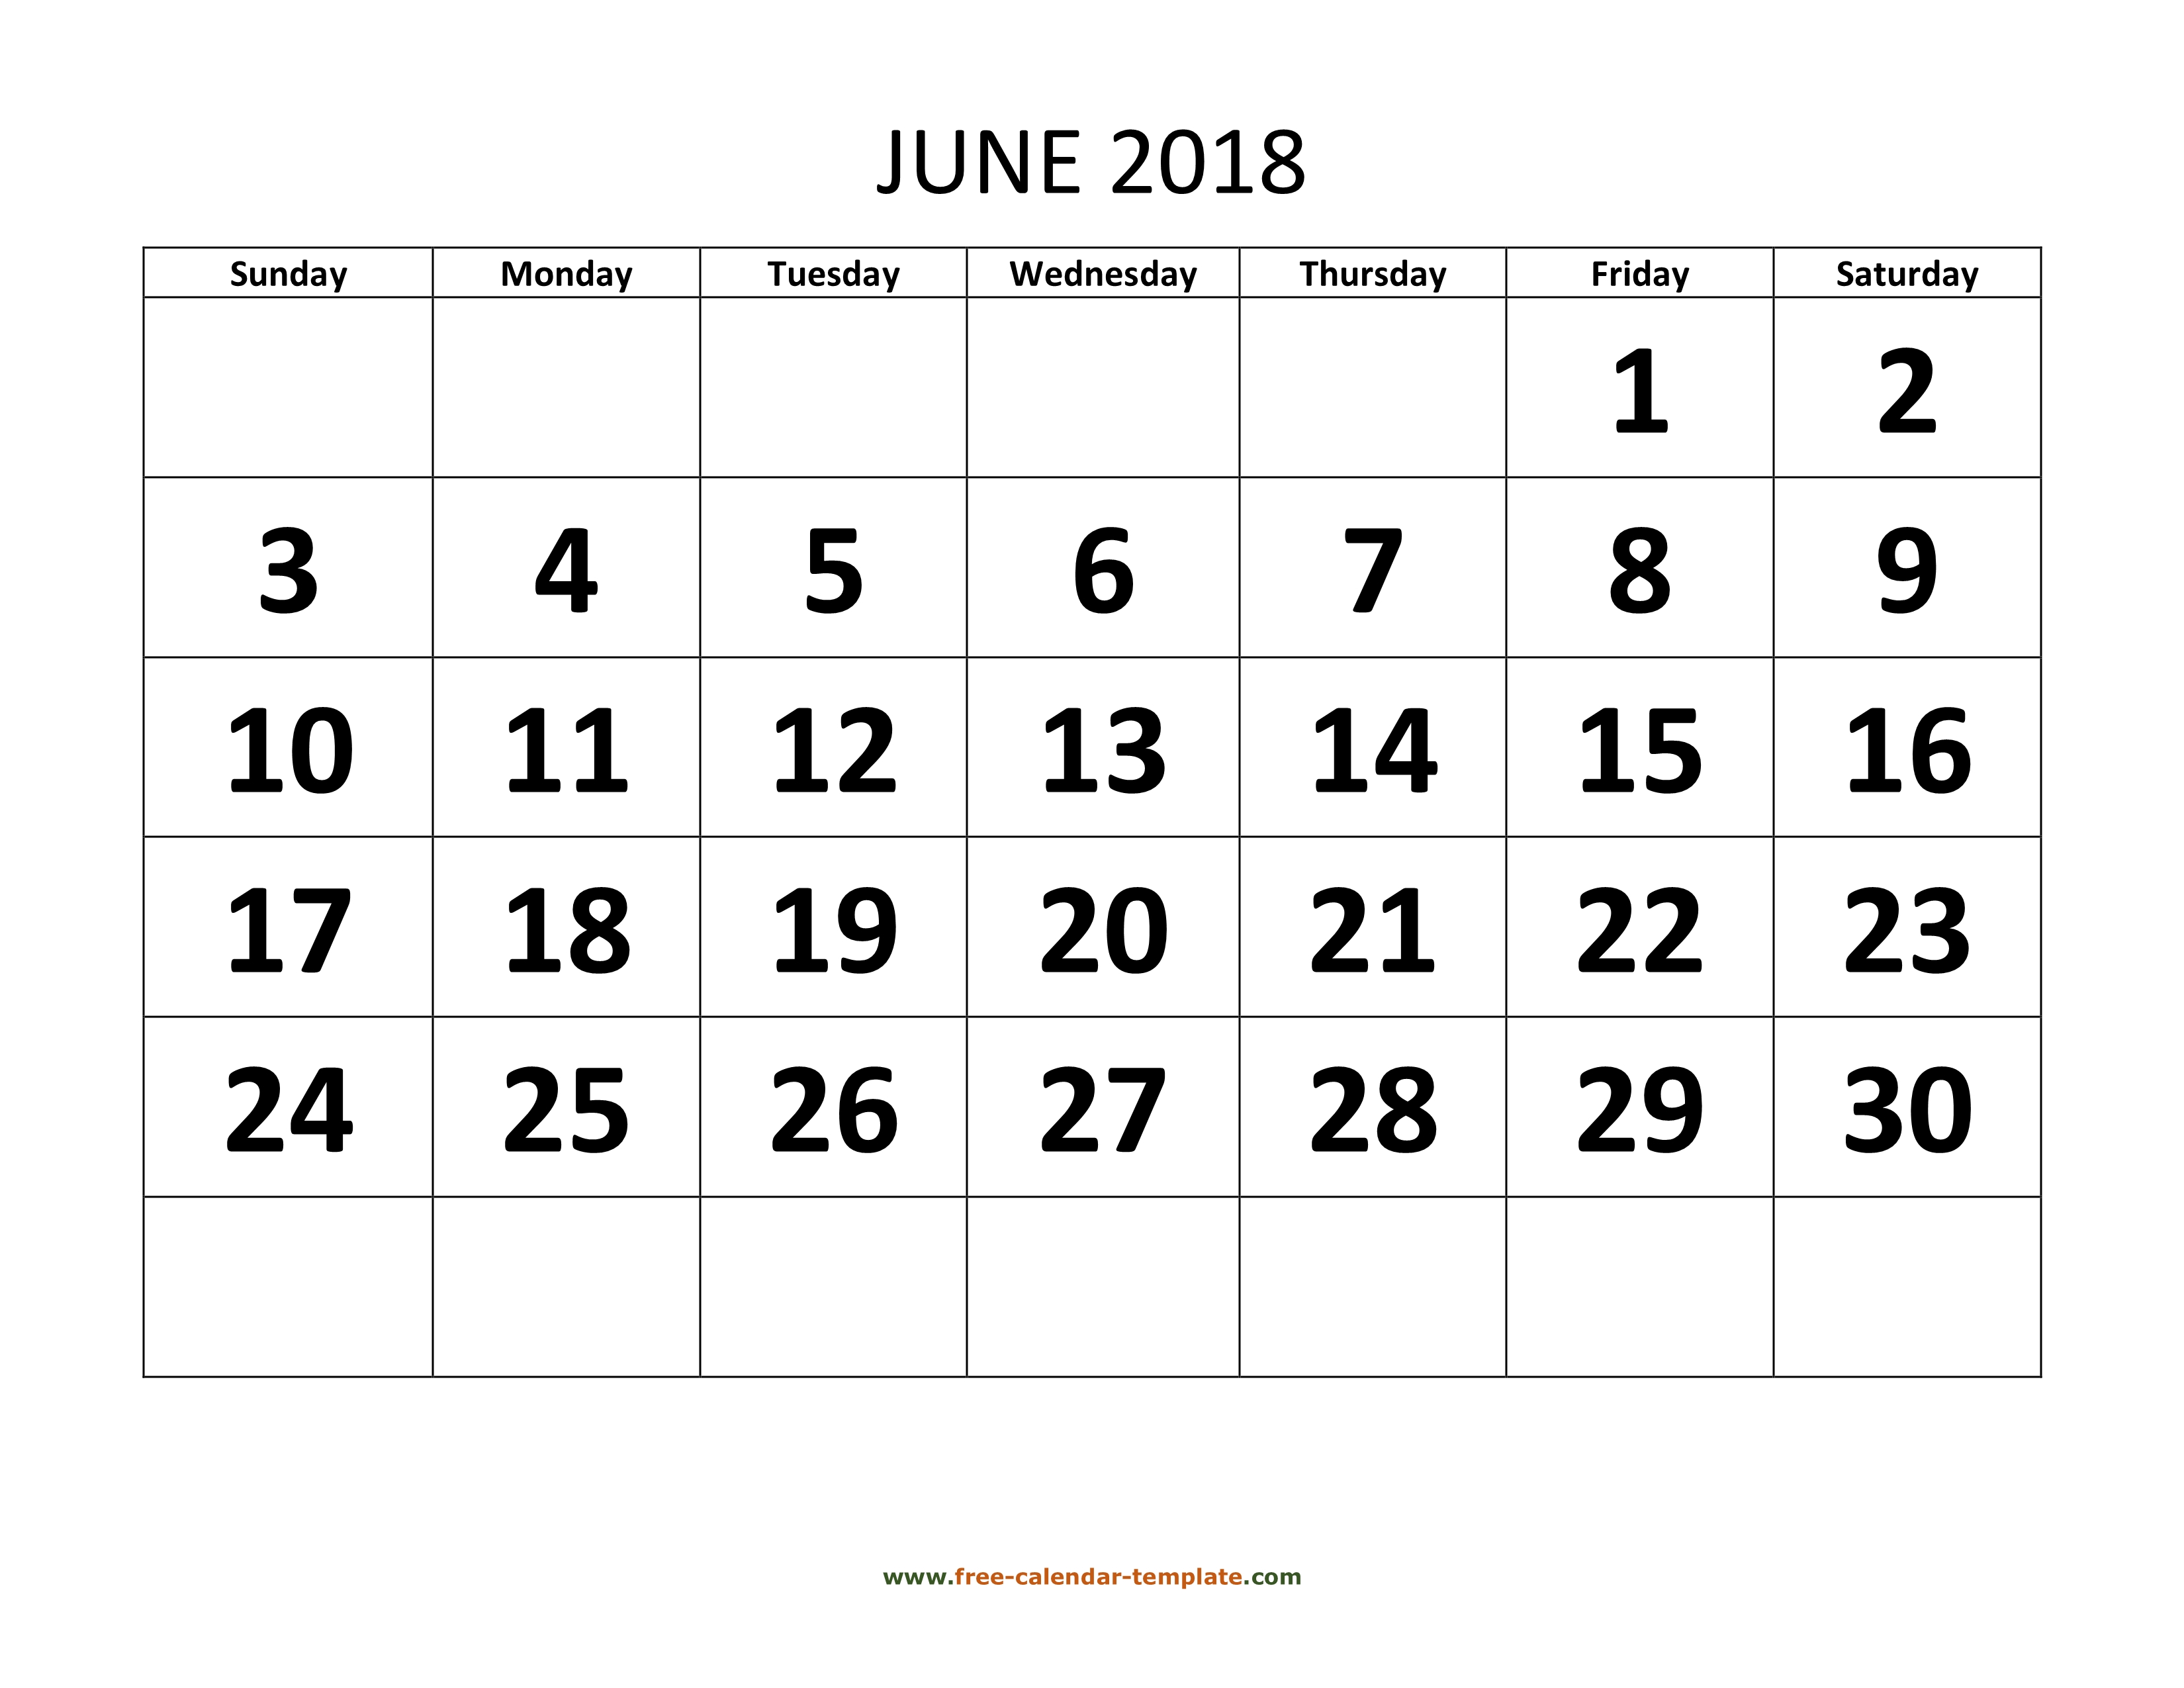 june-2018-calendar-designed-with-large-font-horizontal-free